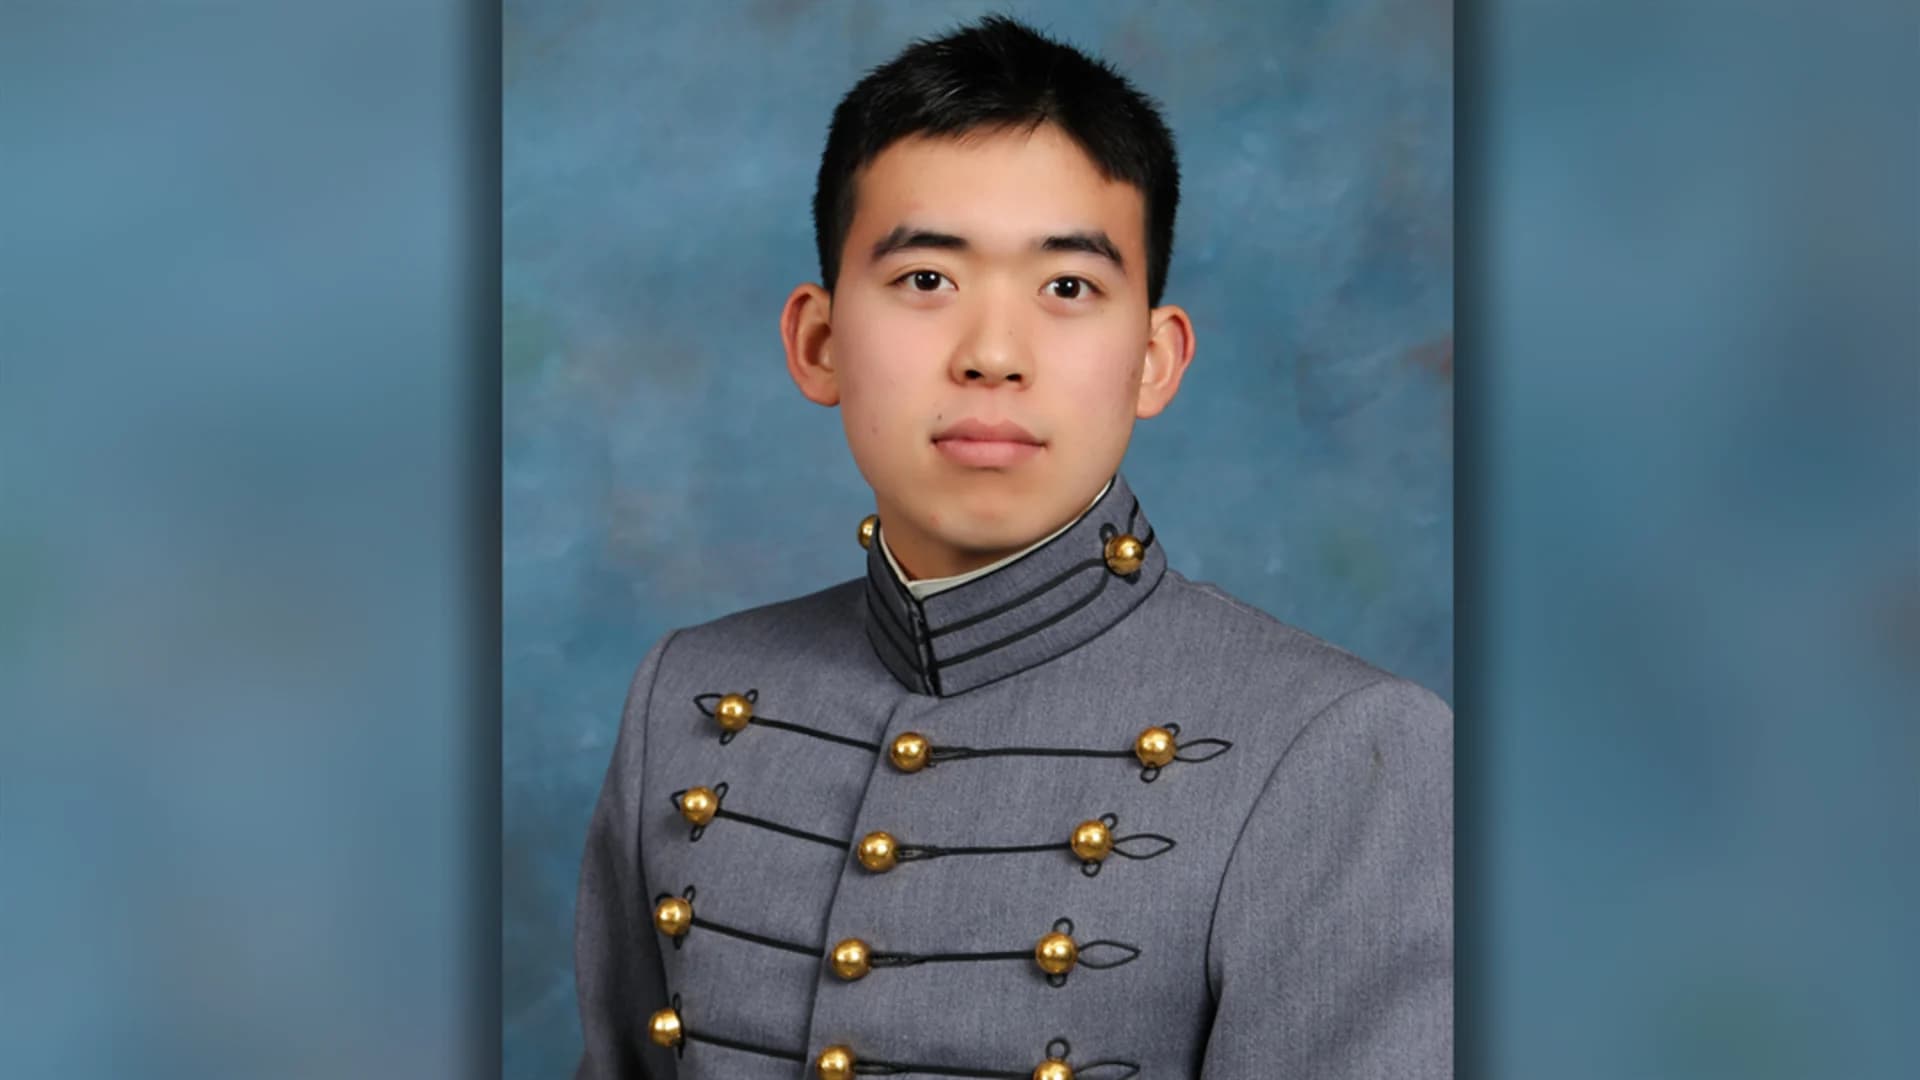 West Point: Missing cadet found dead